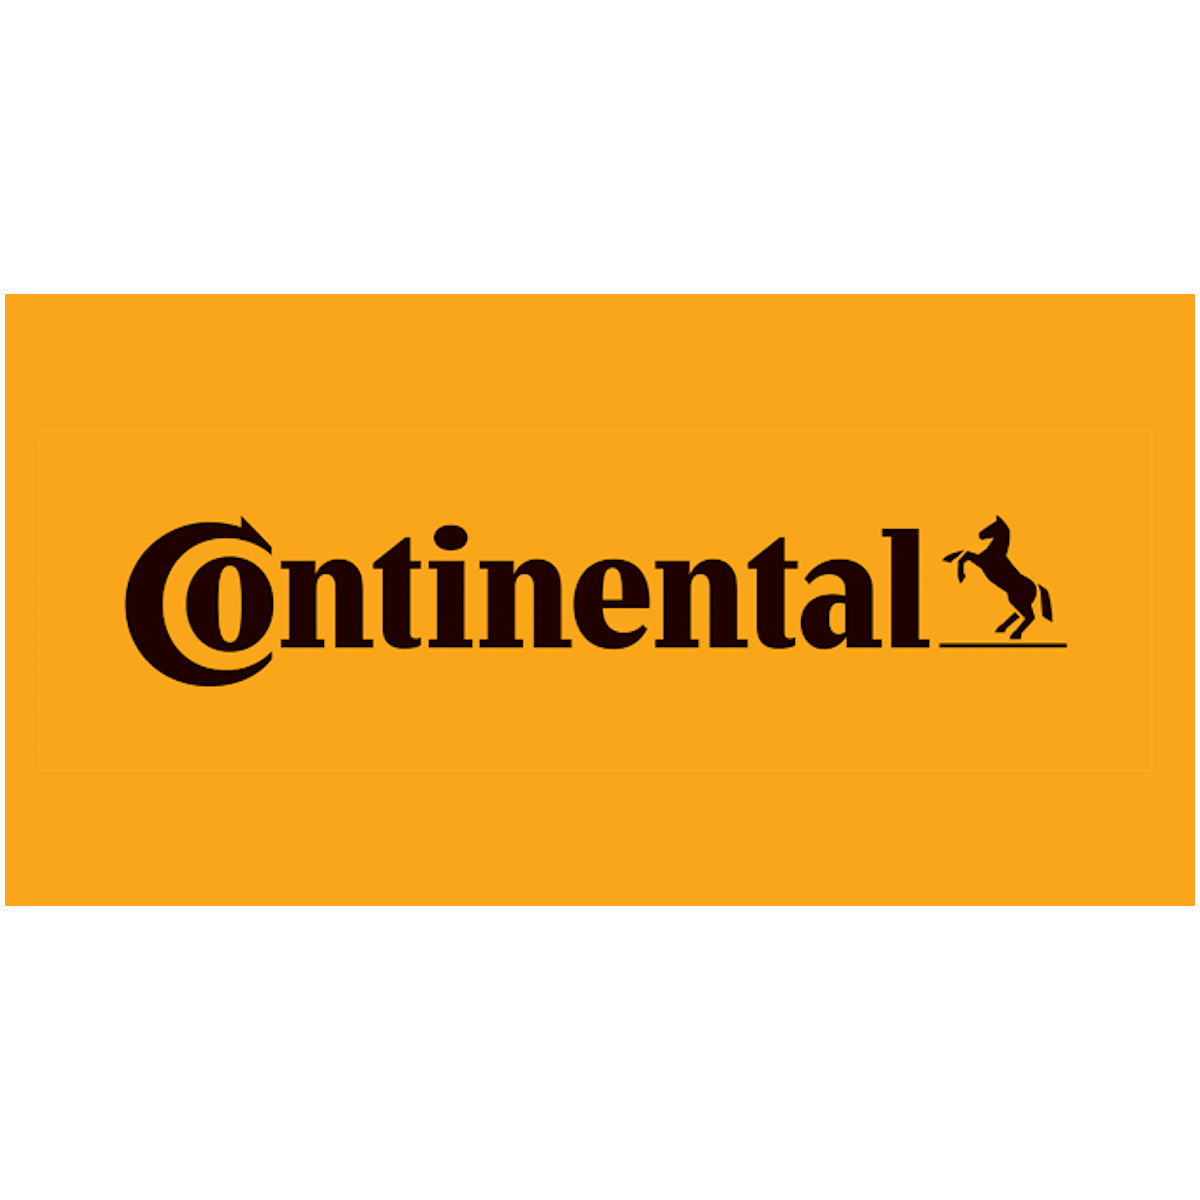 Continental Up Logo